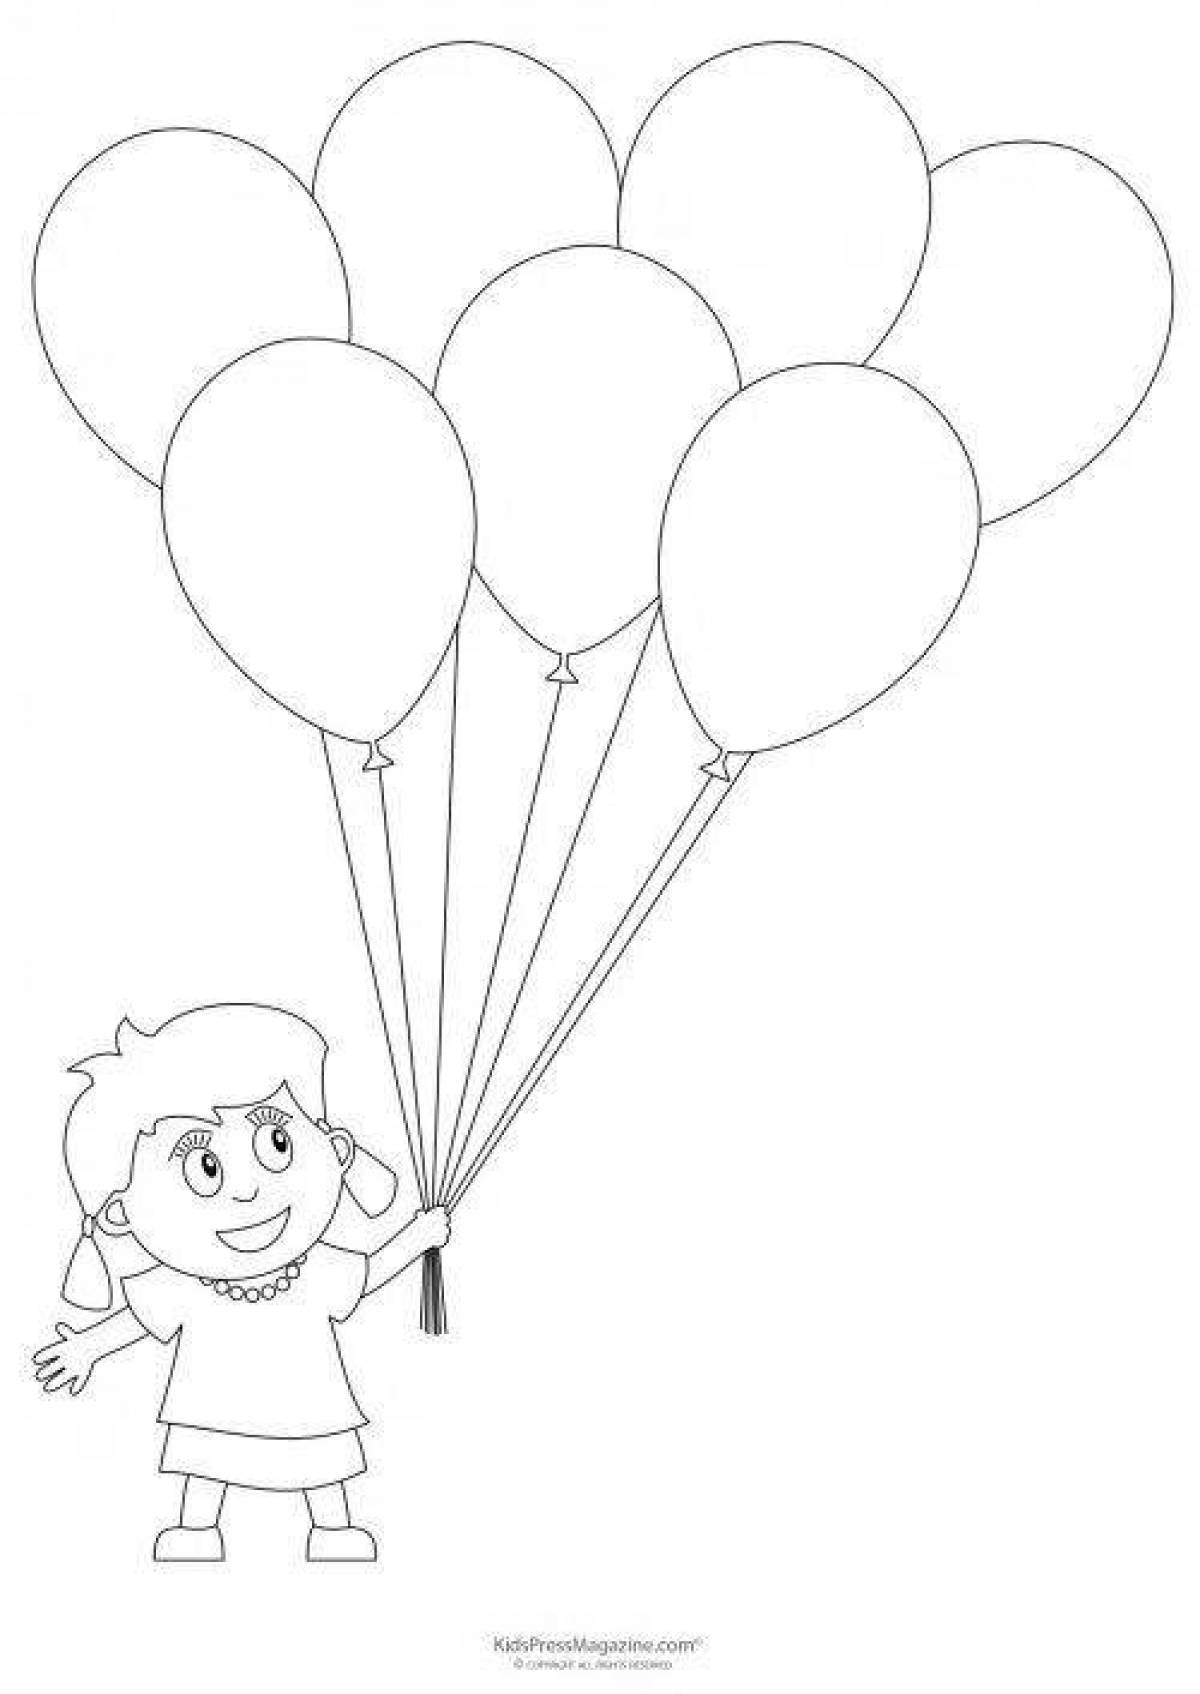 Fun coloring girl with balloons